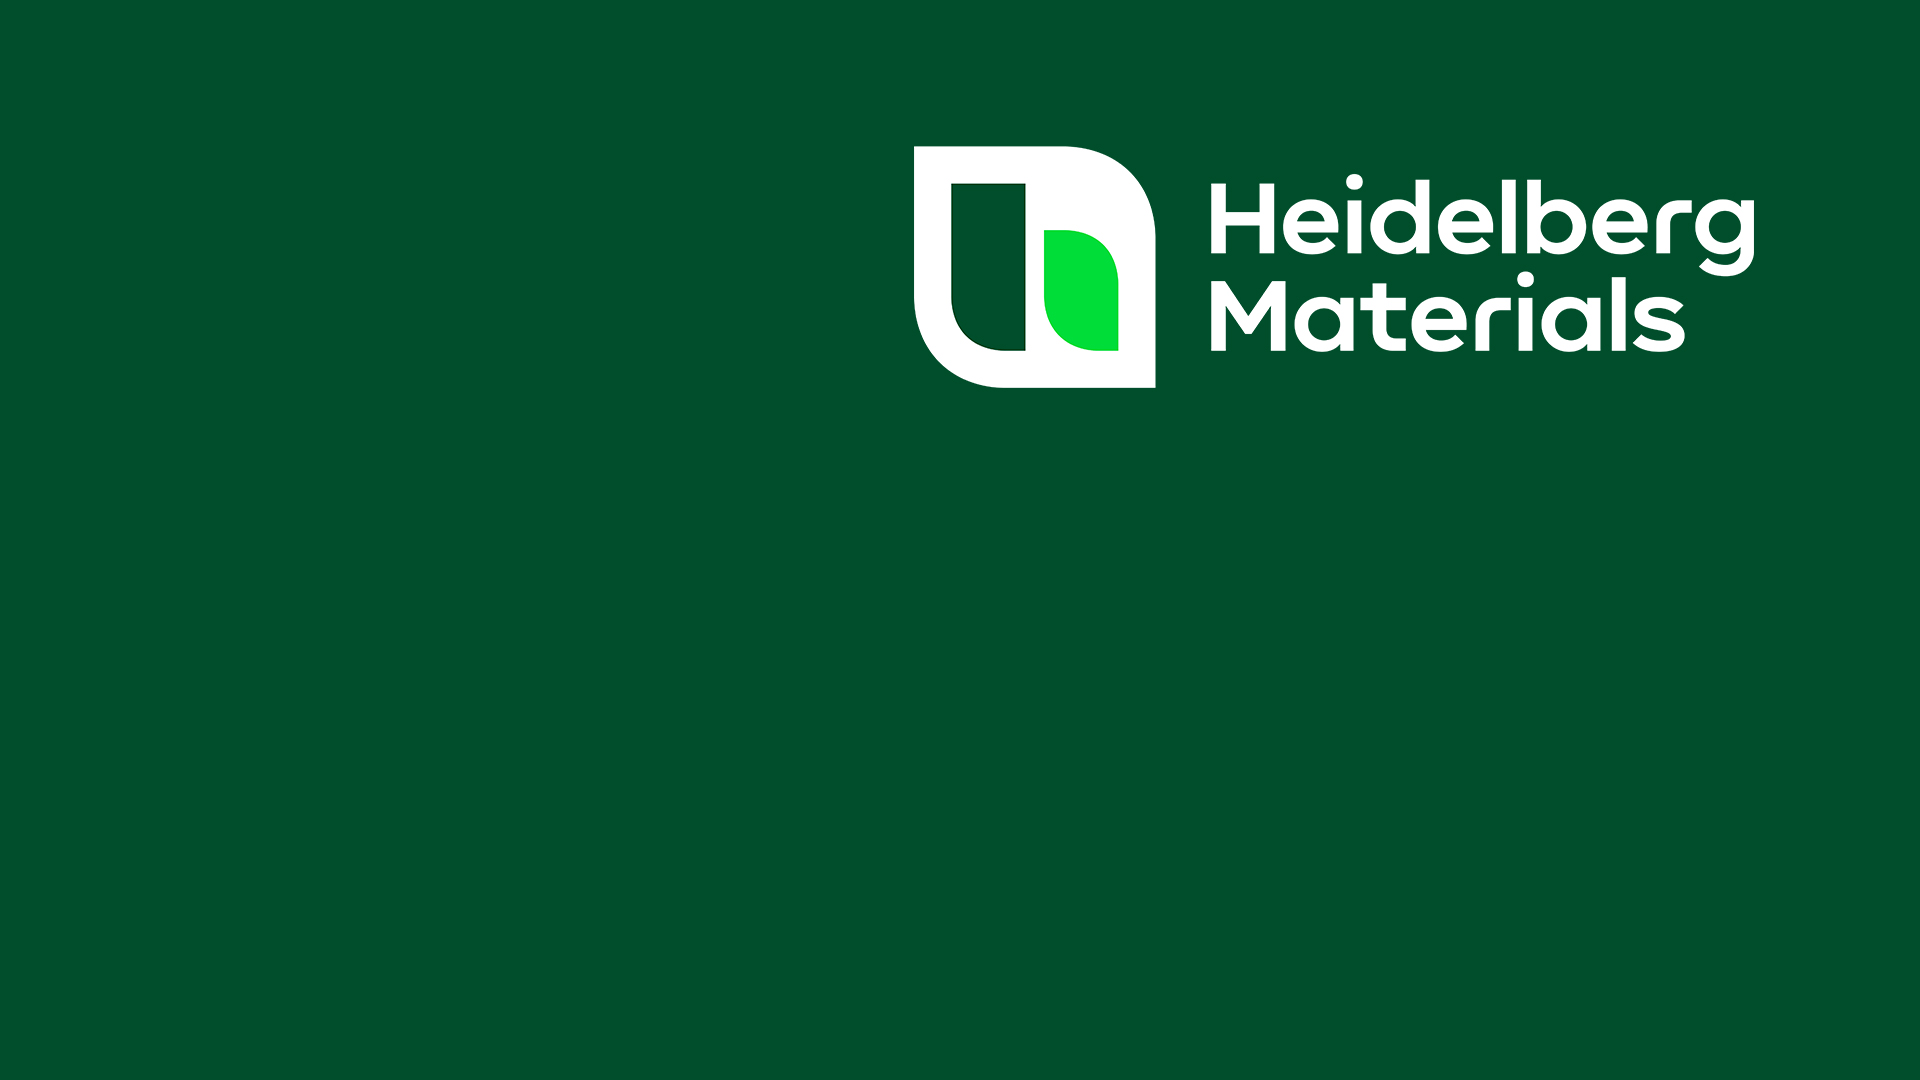 Hanson becomes Heidelberg Materials